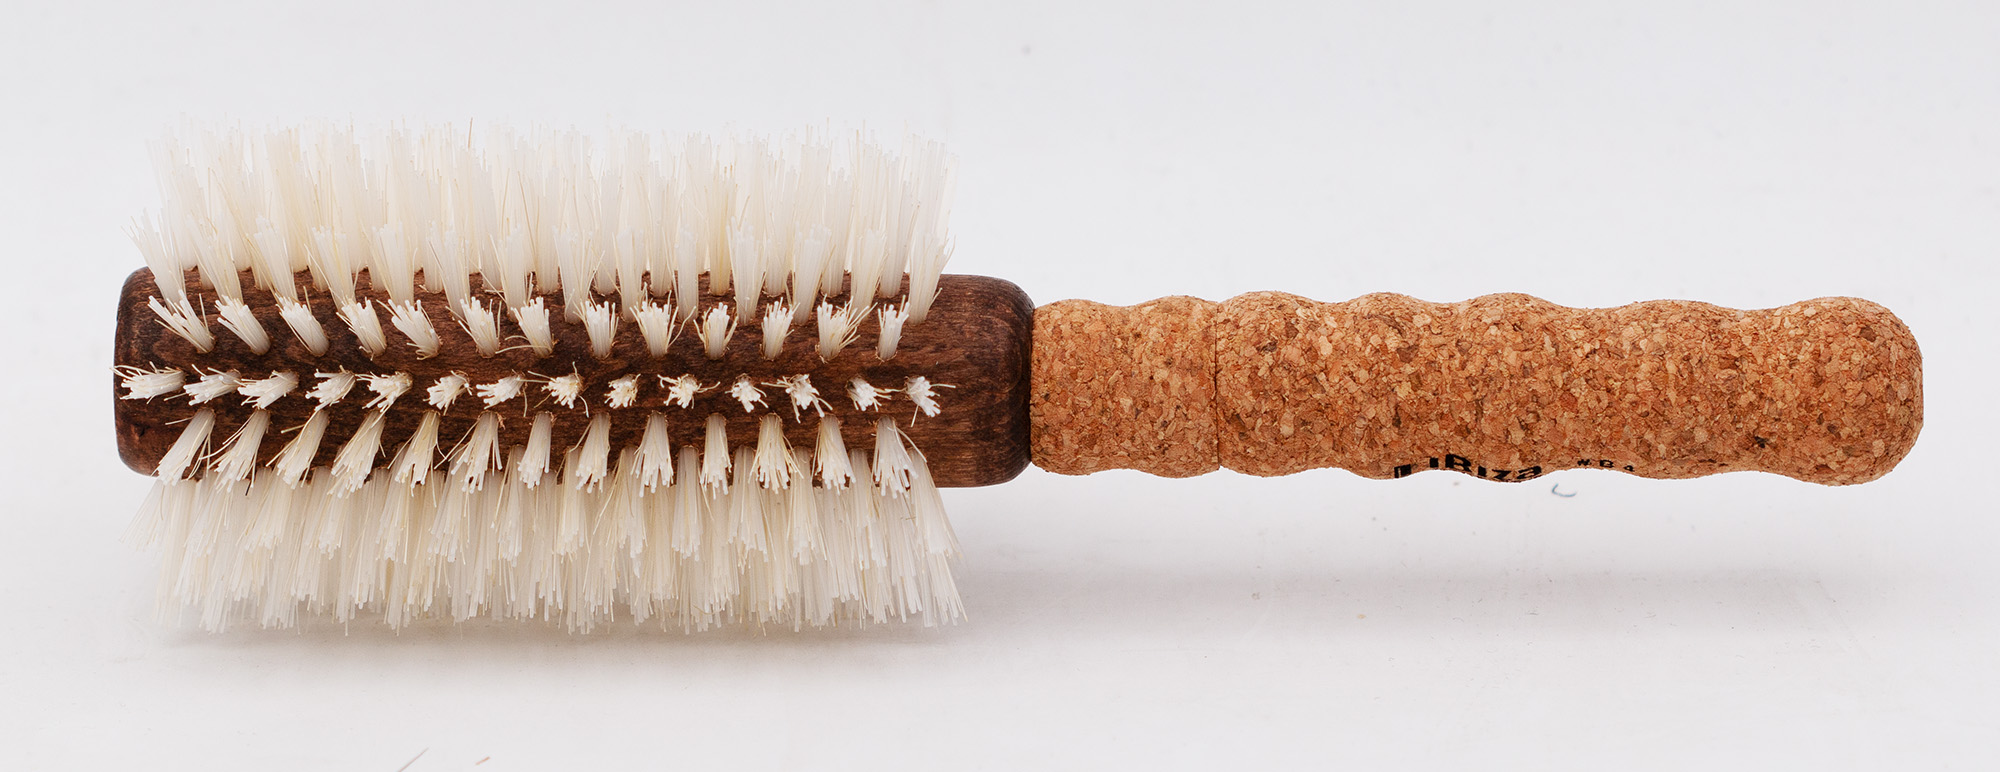 Ibiza Hair Brush - B4 Boar Bristle Round Hair Brush for Fine or Color Treated Hair - Salon Quality - Heat Resistant 65mm Hair Brush